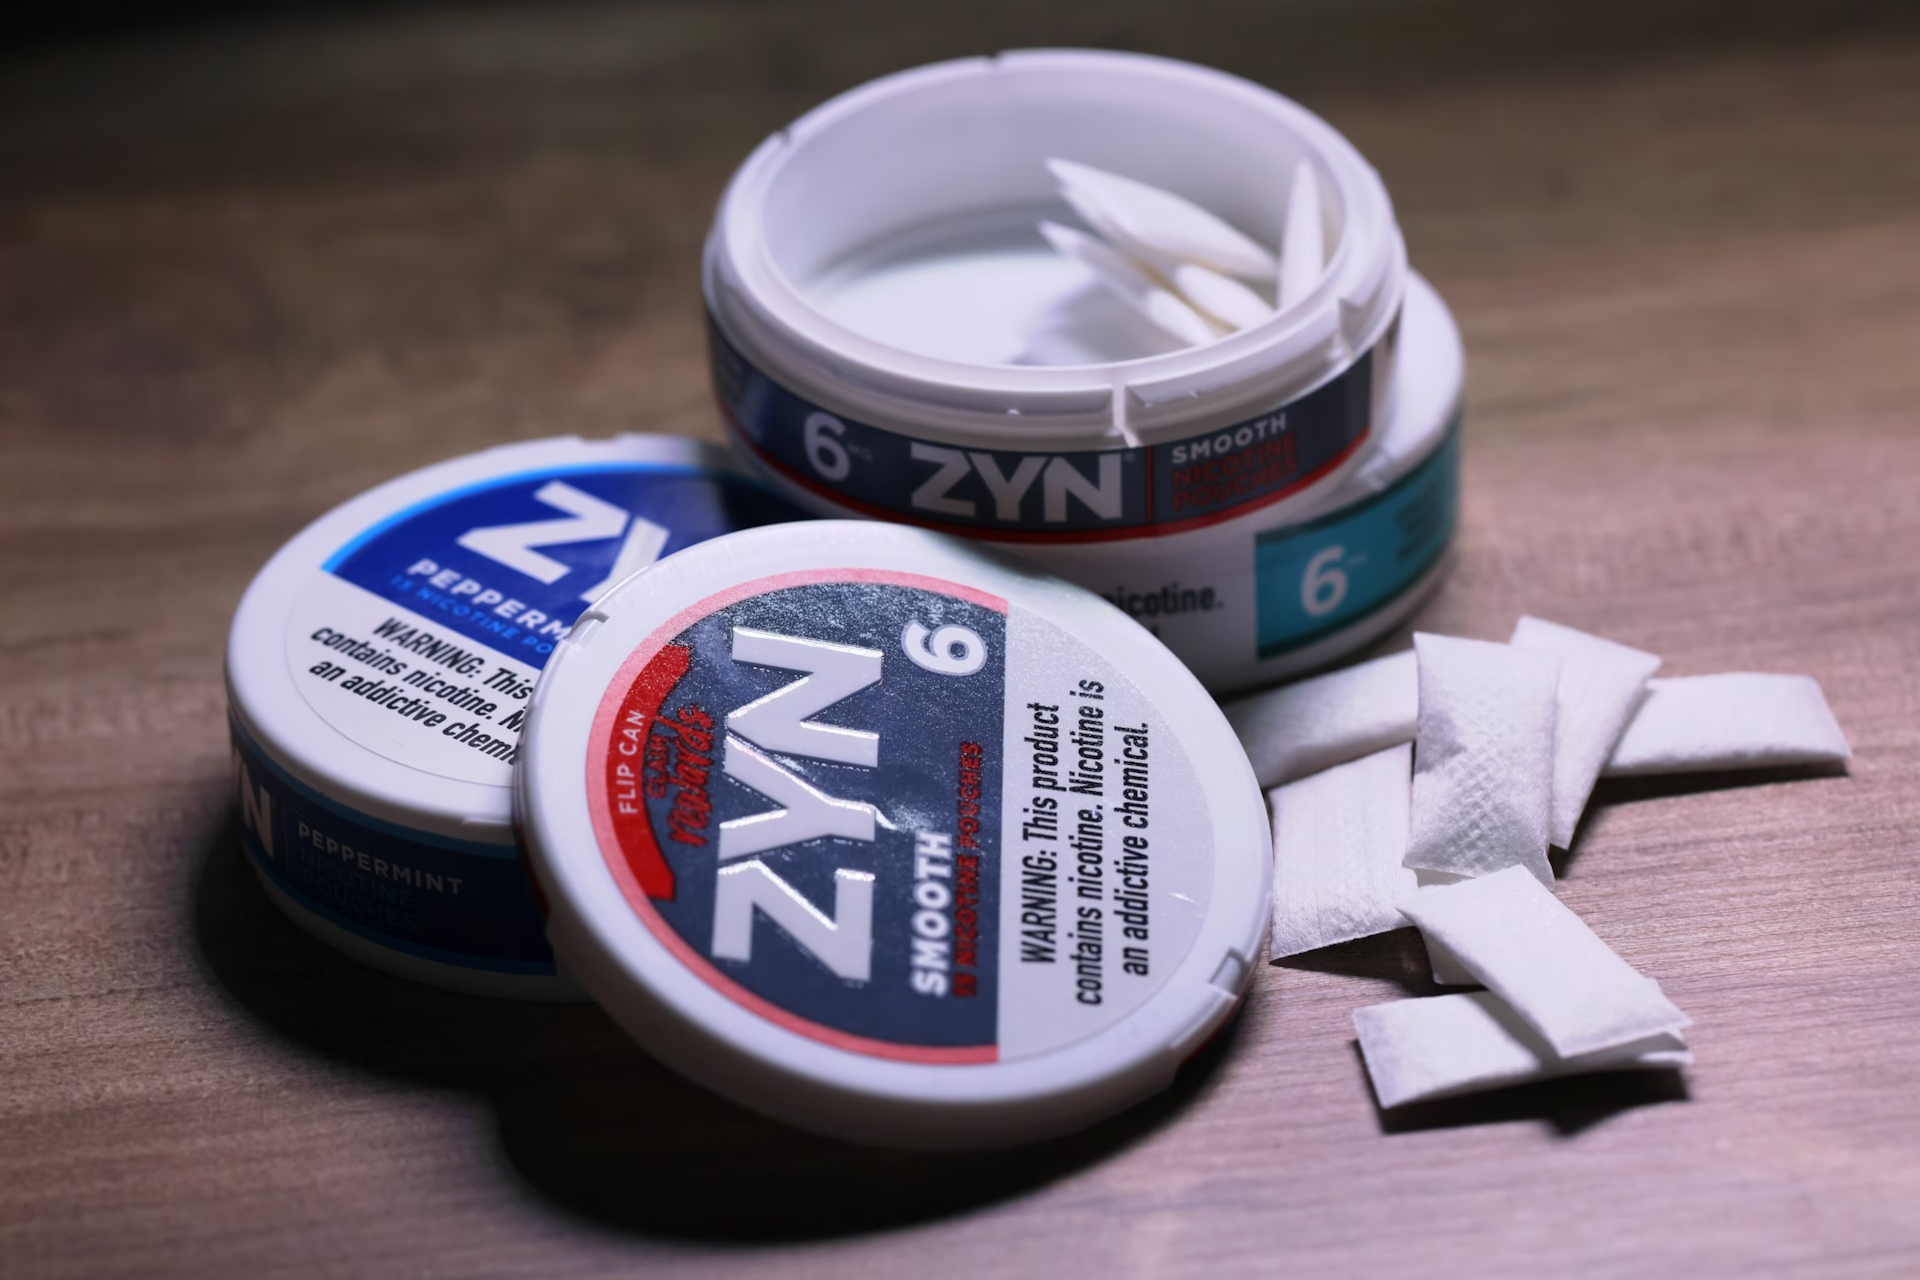 Bolsitas de nicotina de la marca Zyn